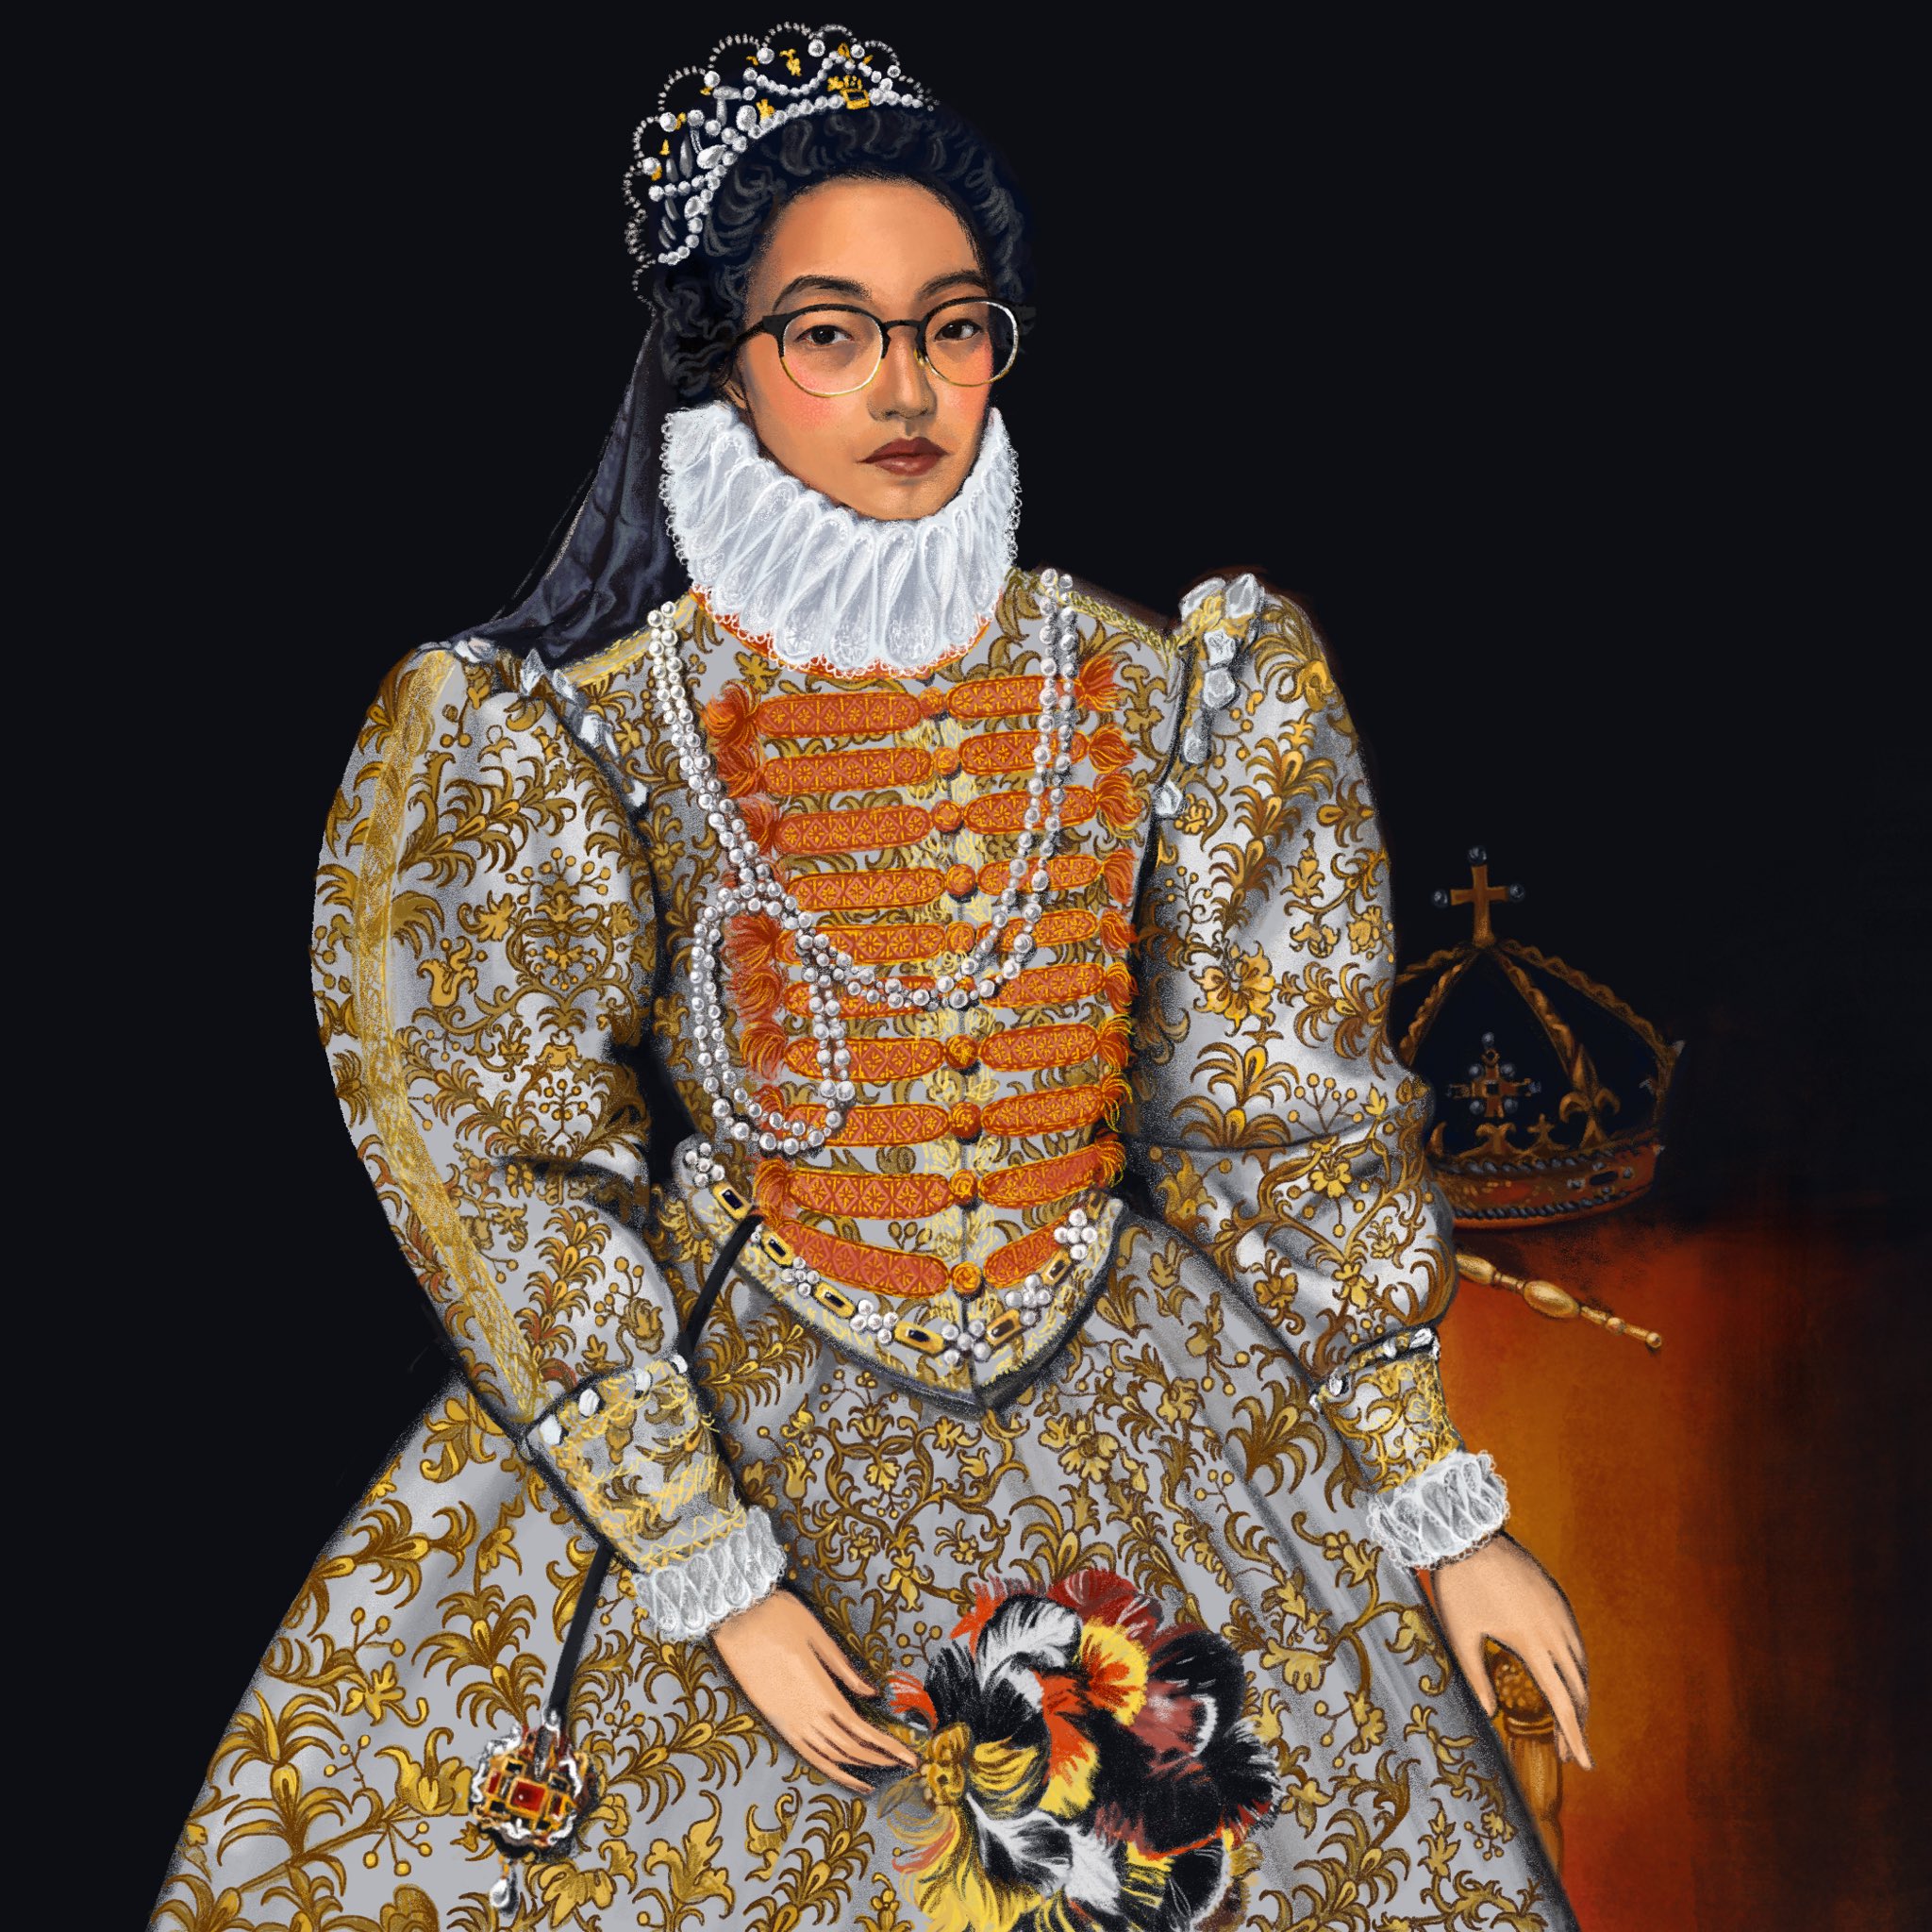 My copy of Queen Elizabeth I by Unknown artist